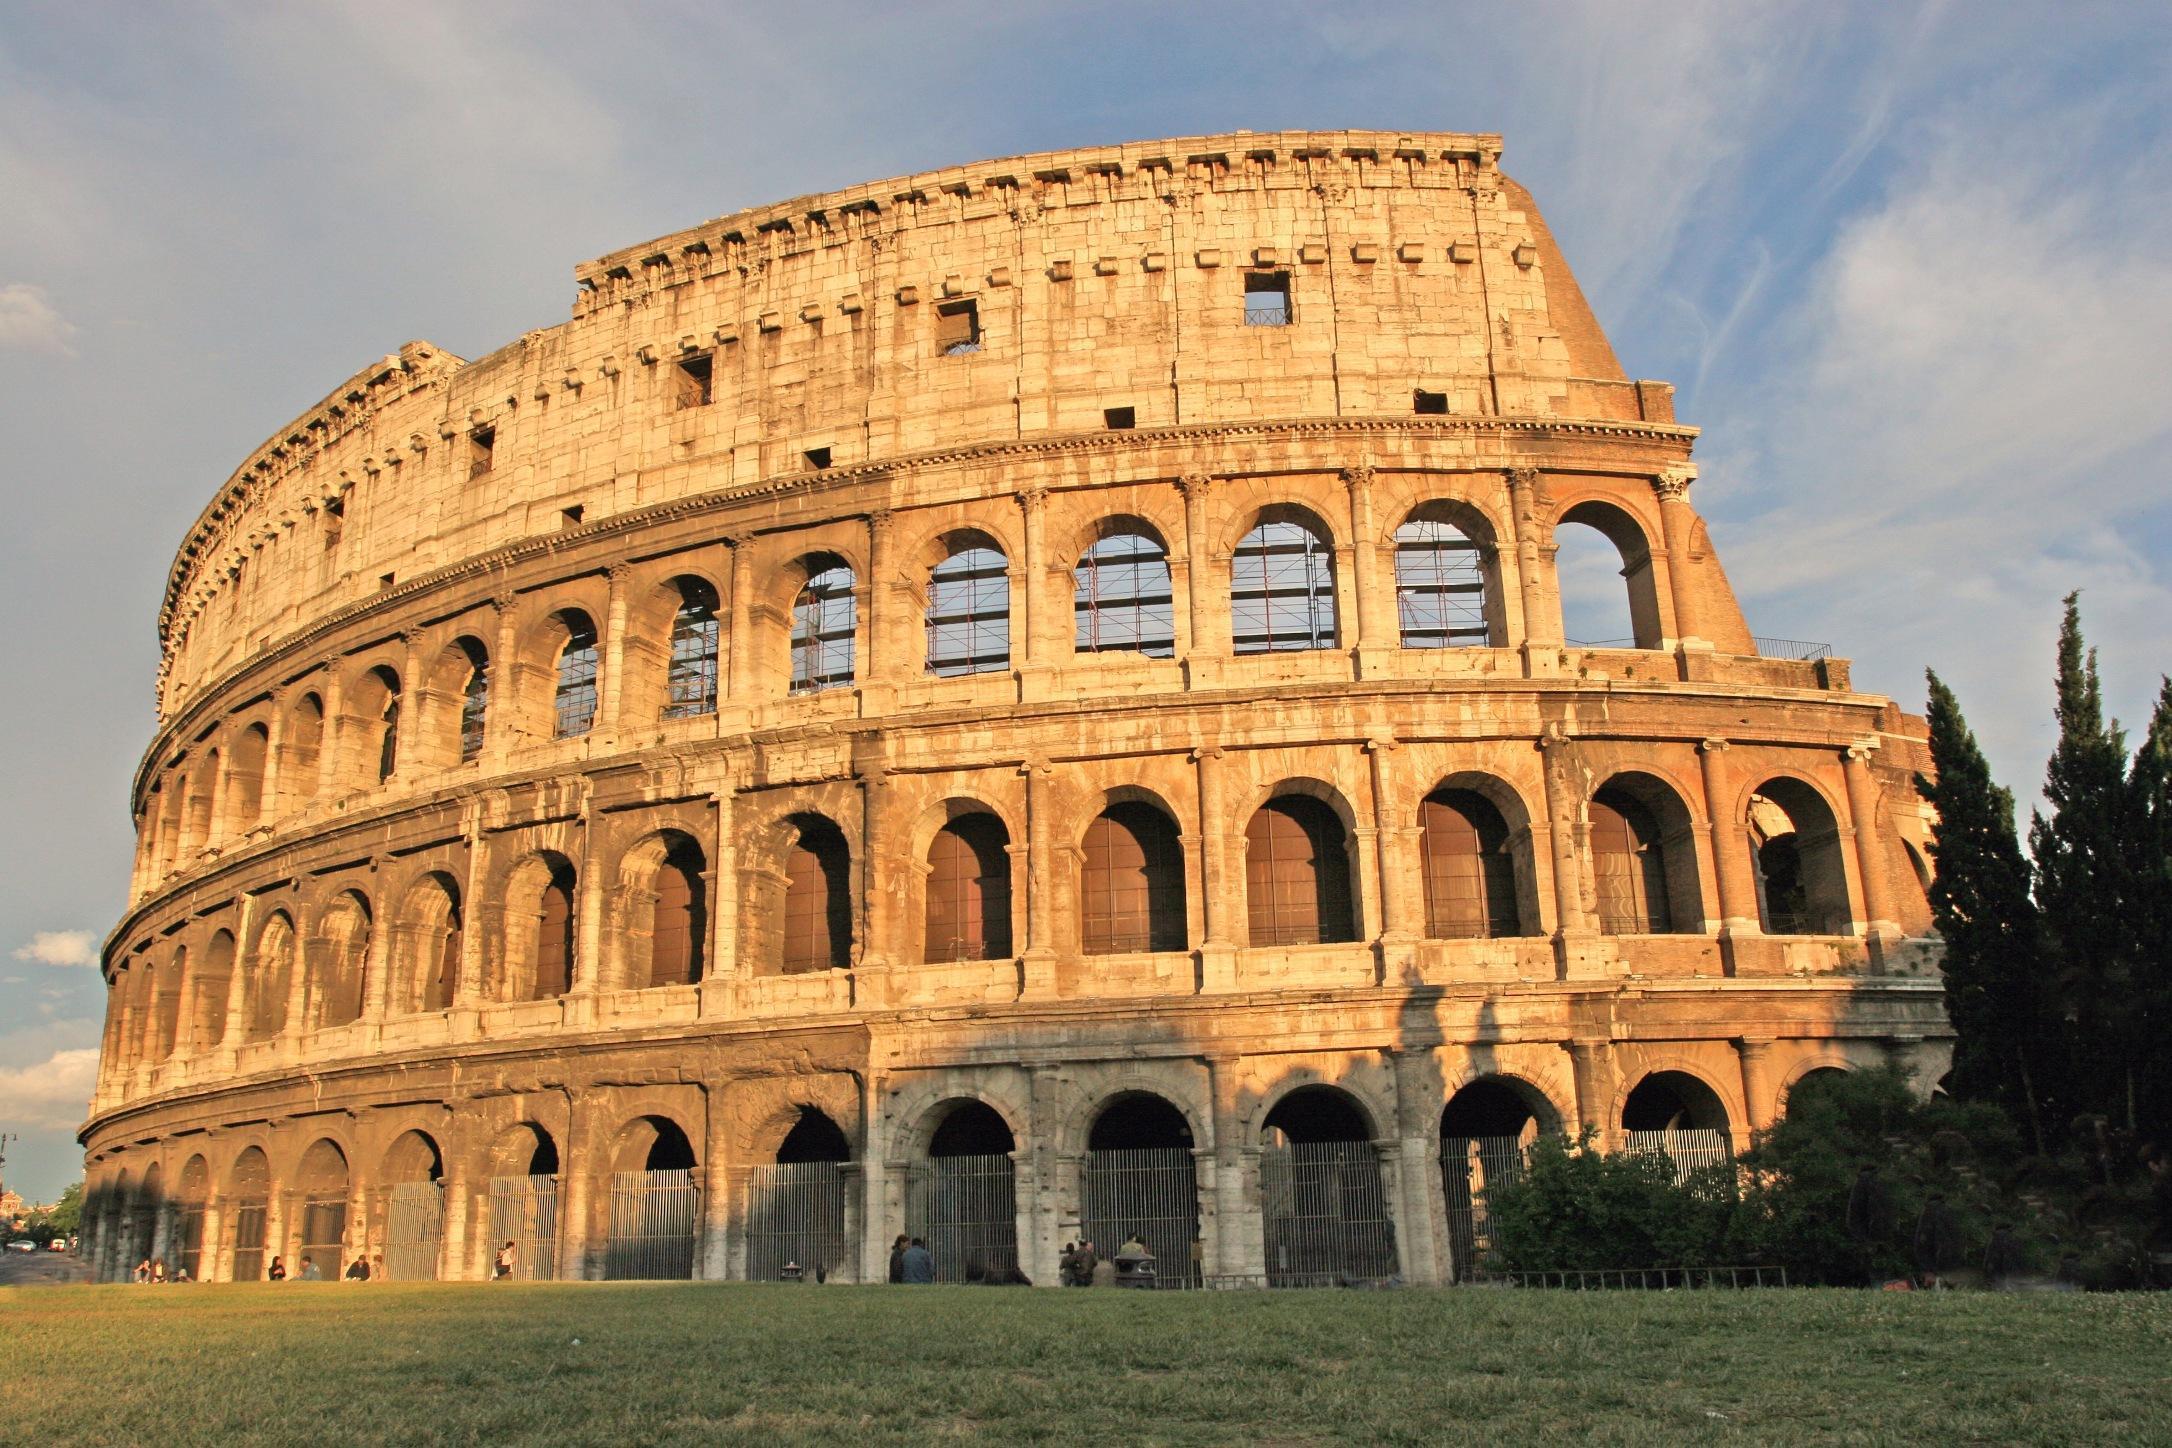 World miracle Colosseum wallpaper free desktop background